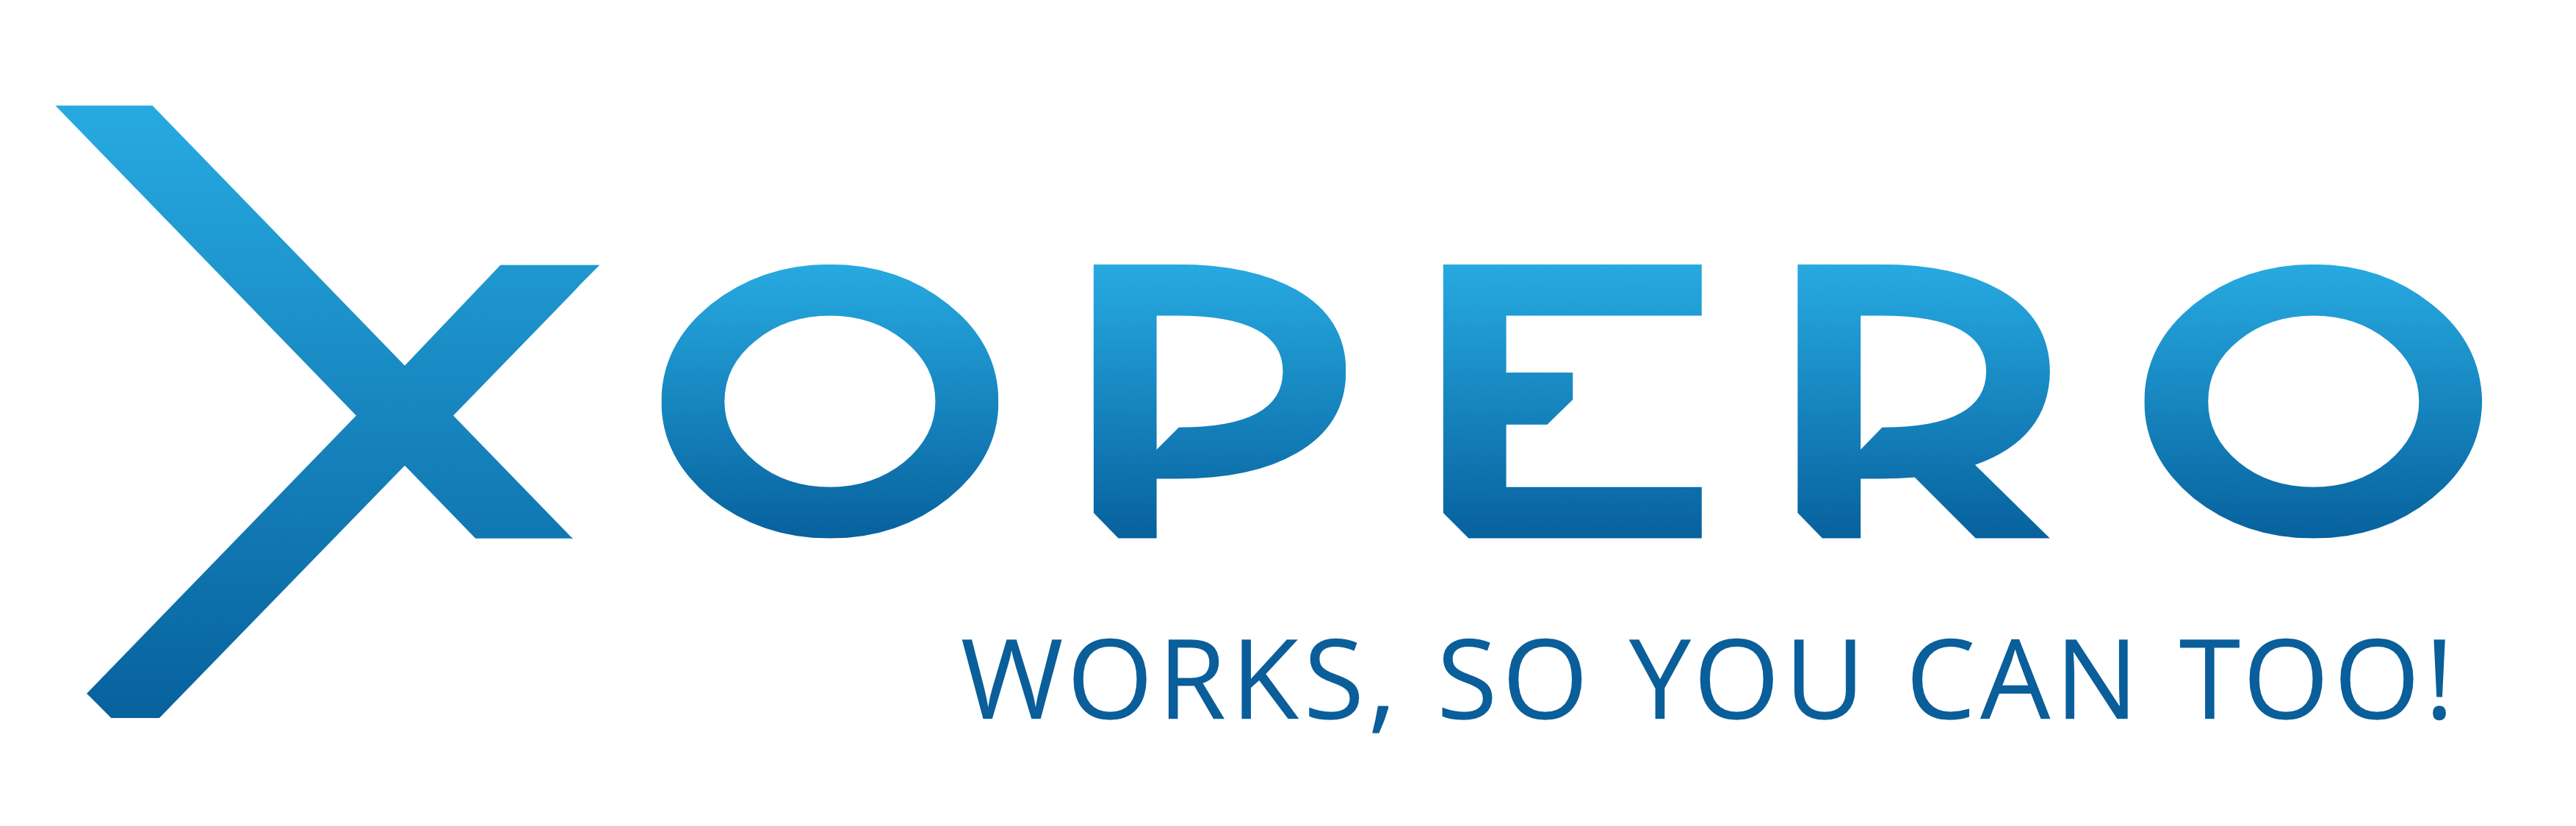 Xopero Logo